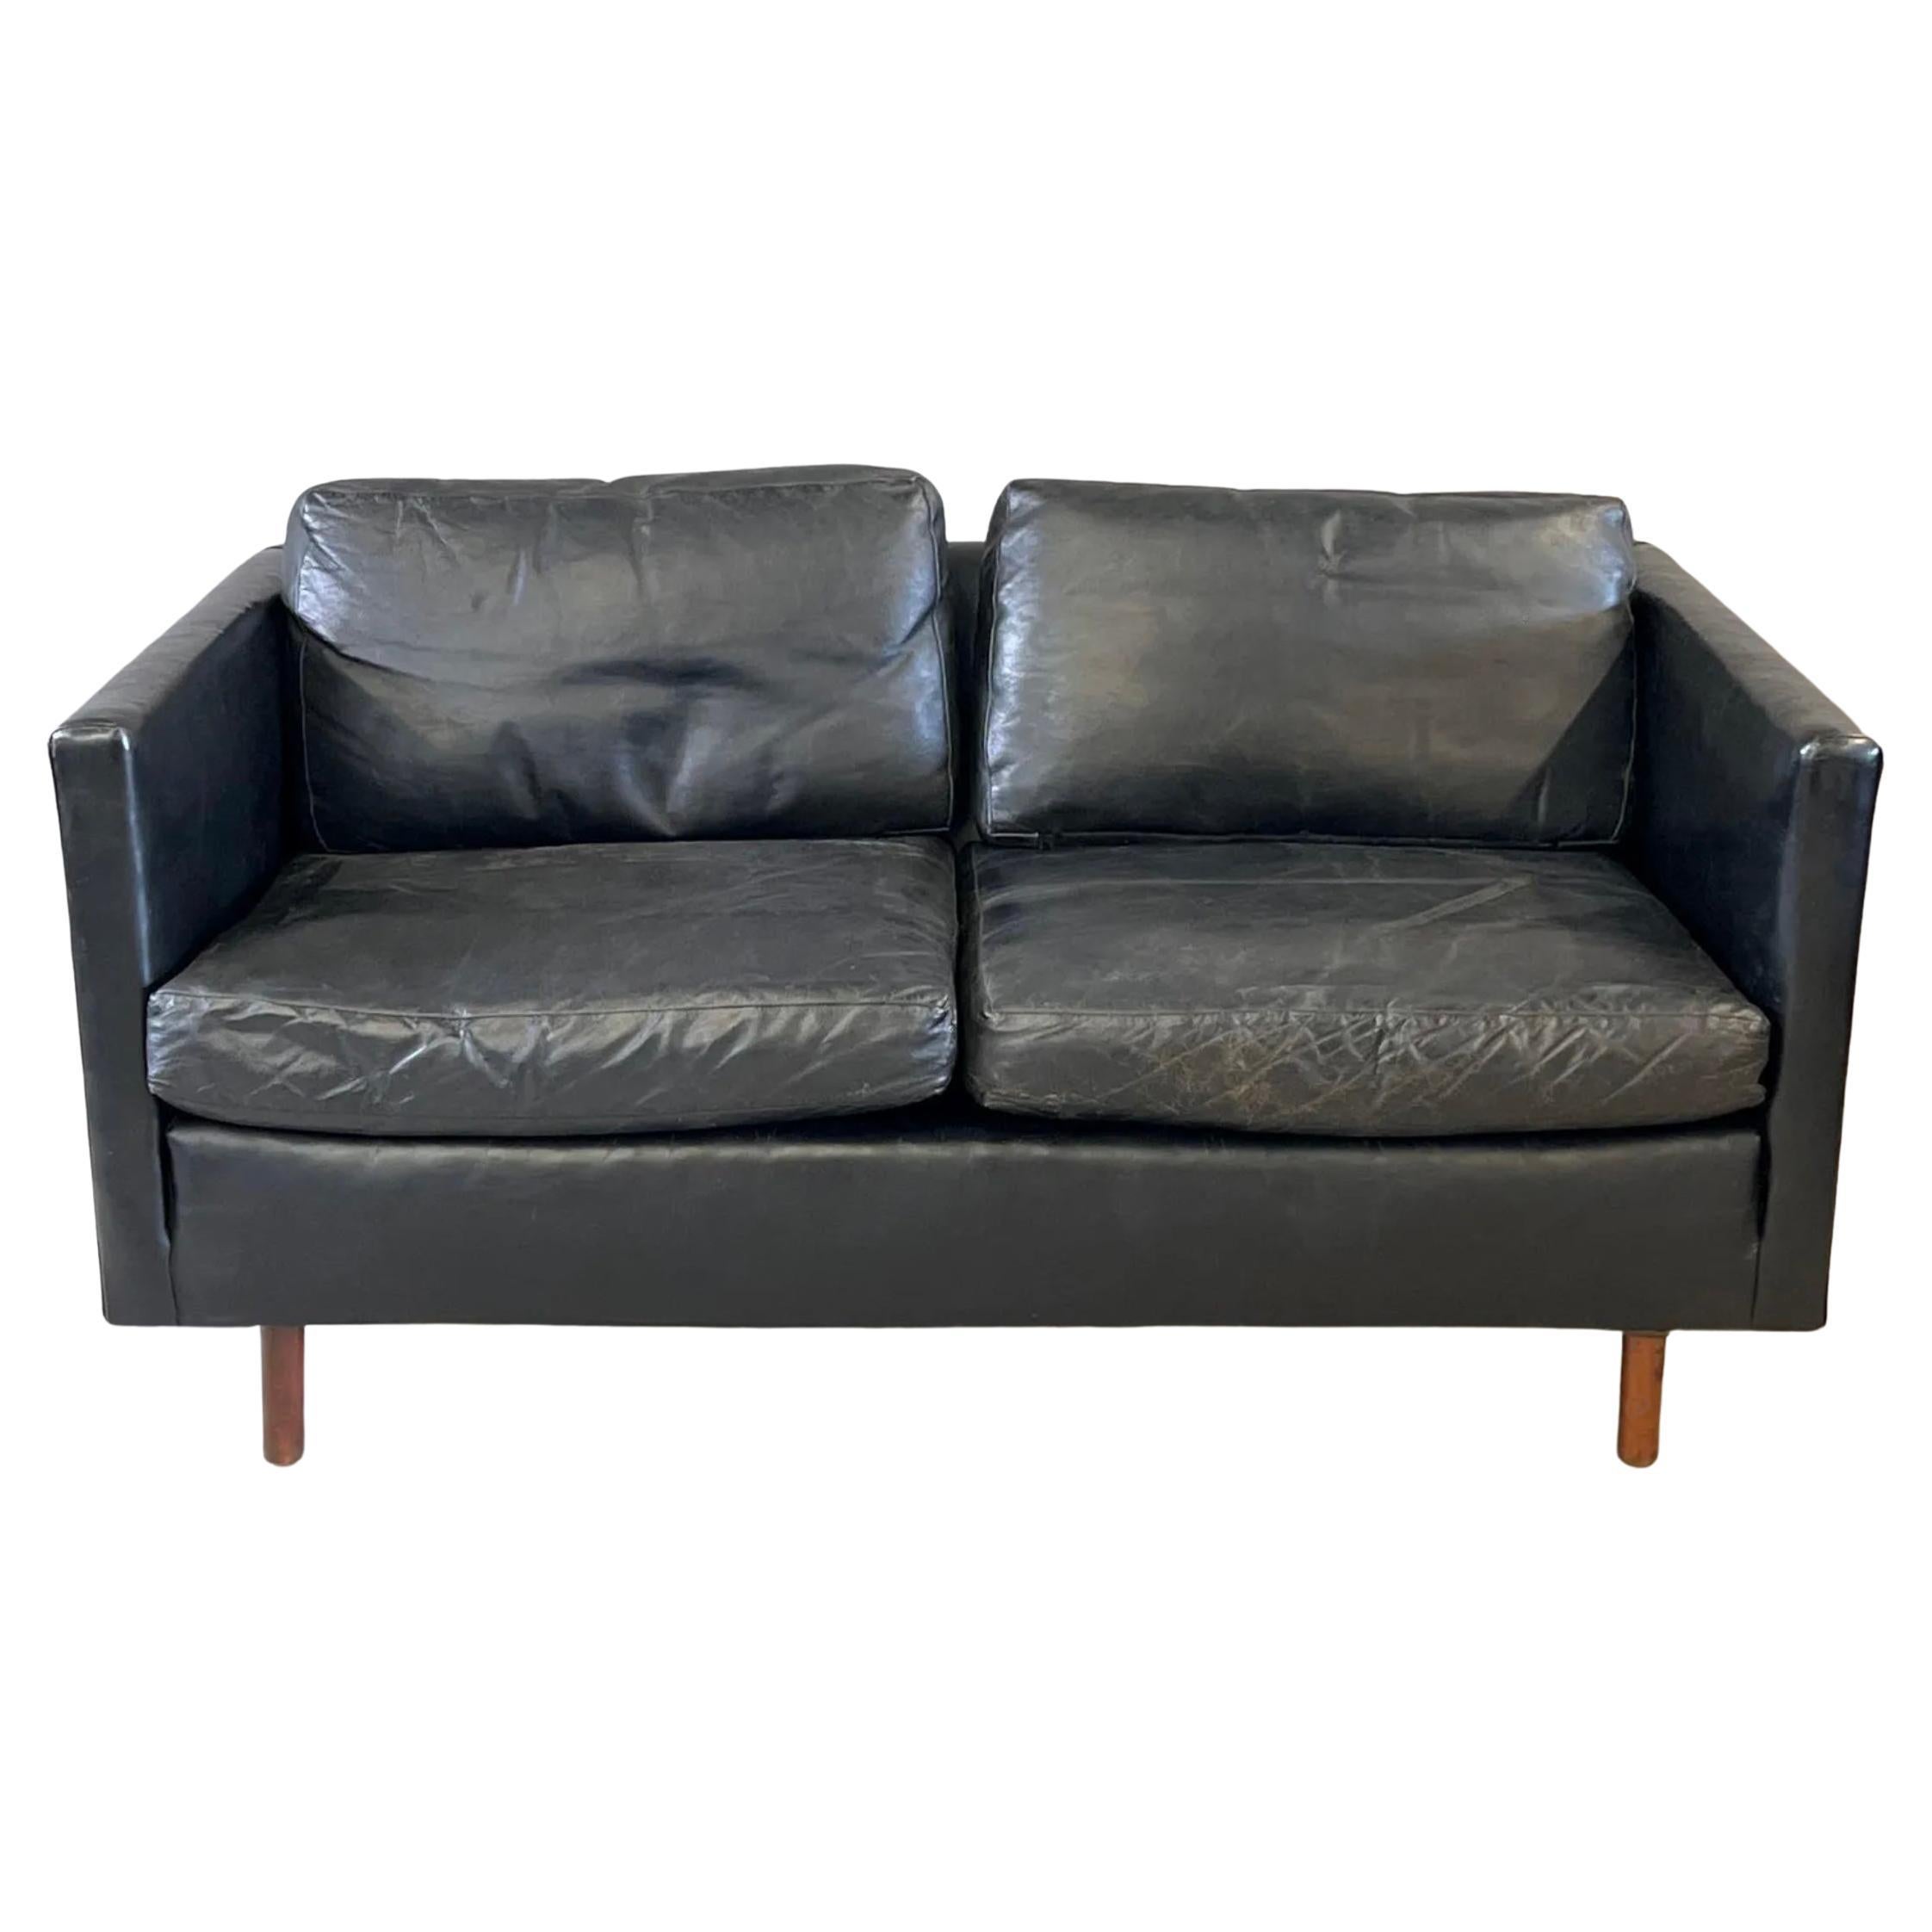 Midcentury Danish Modern Beautiful Black Leather 2 Seat Sofa Teak Round Legs For Sale